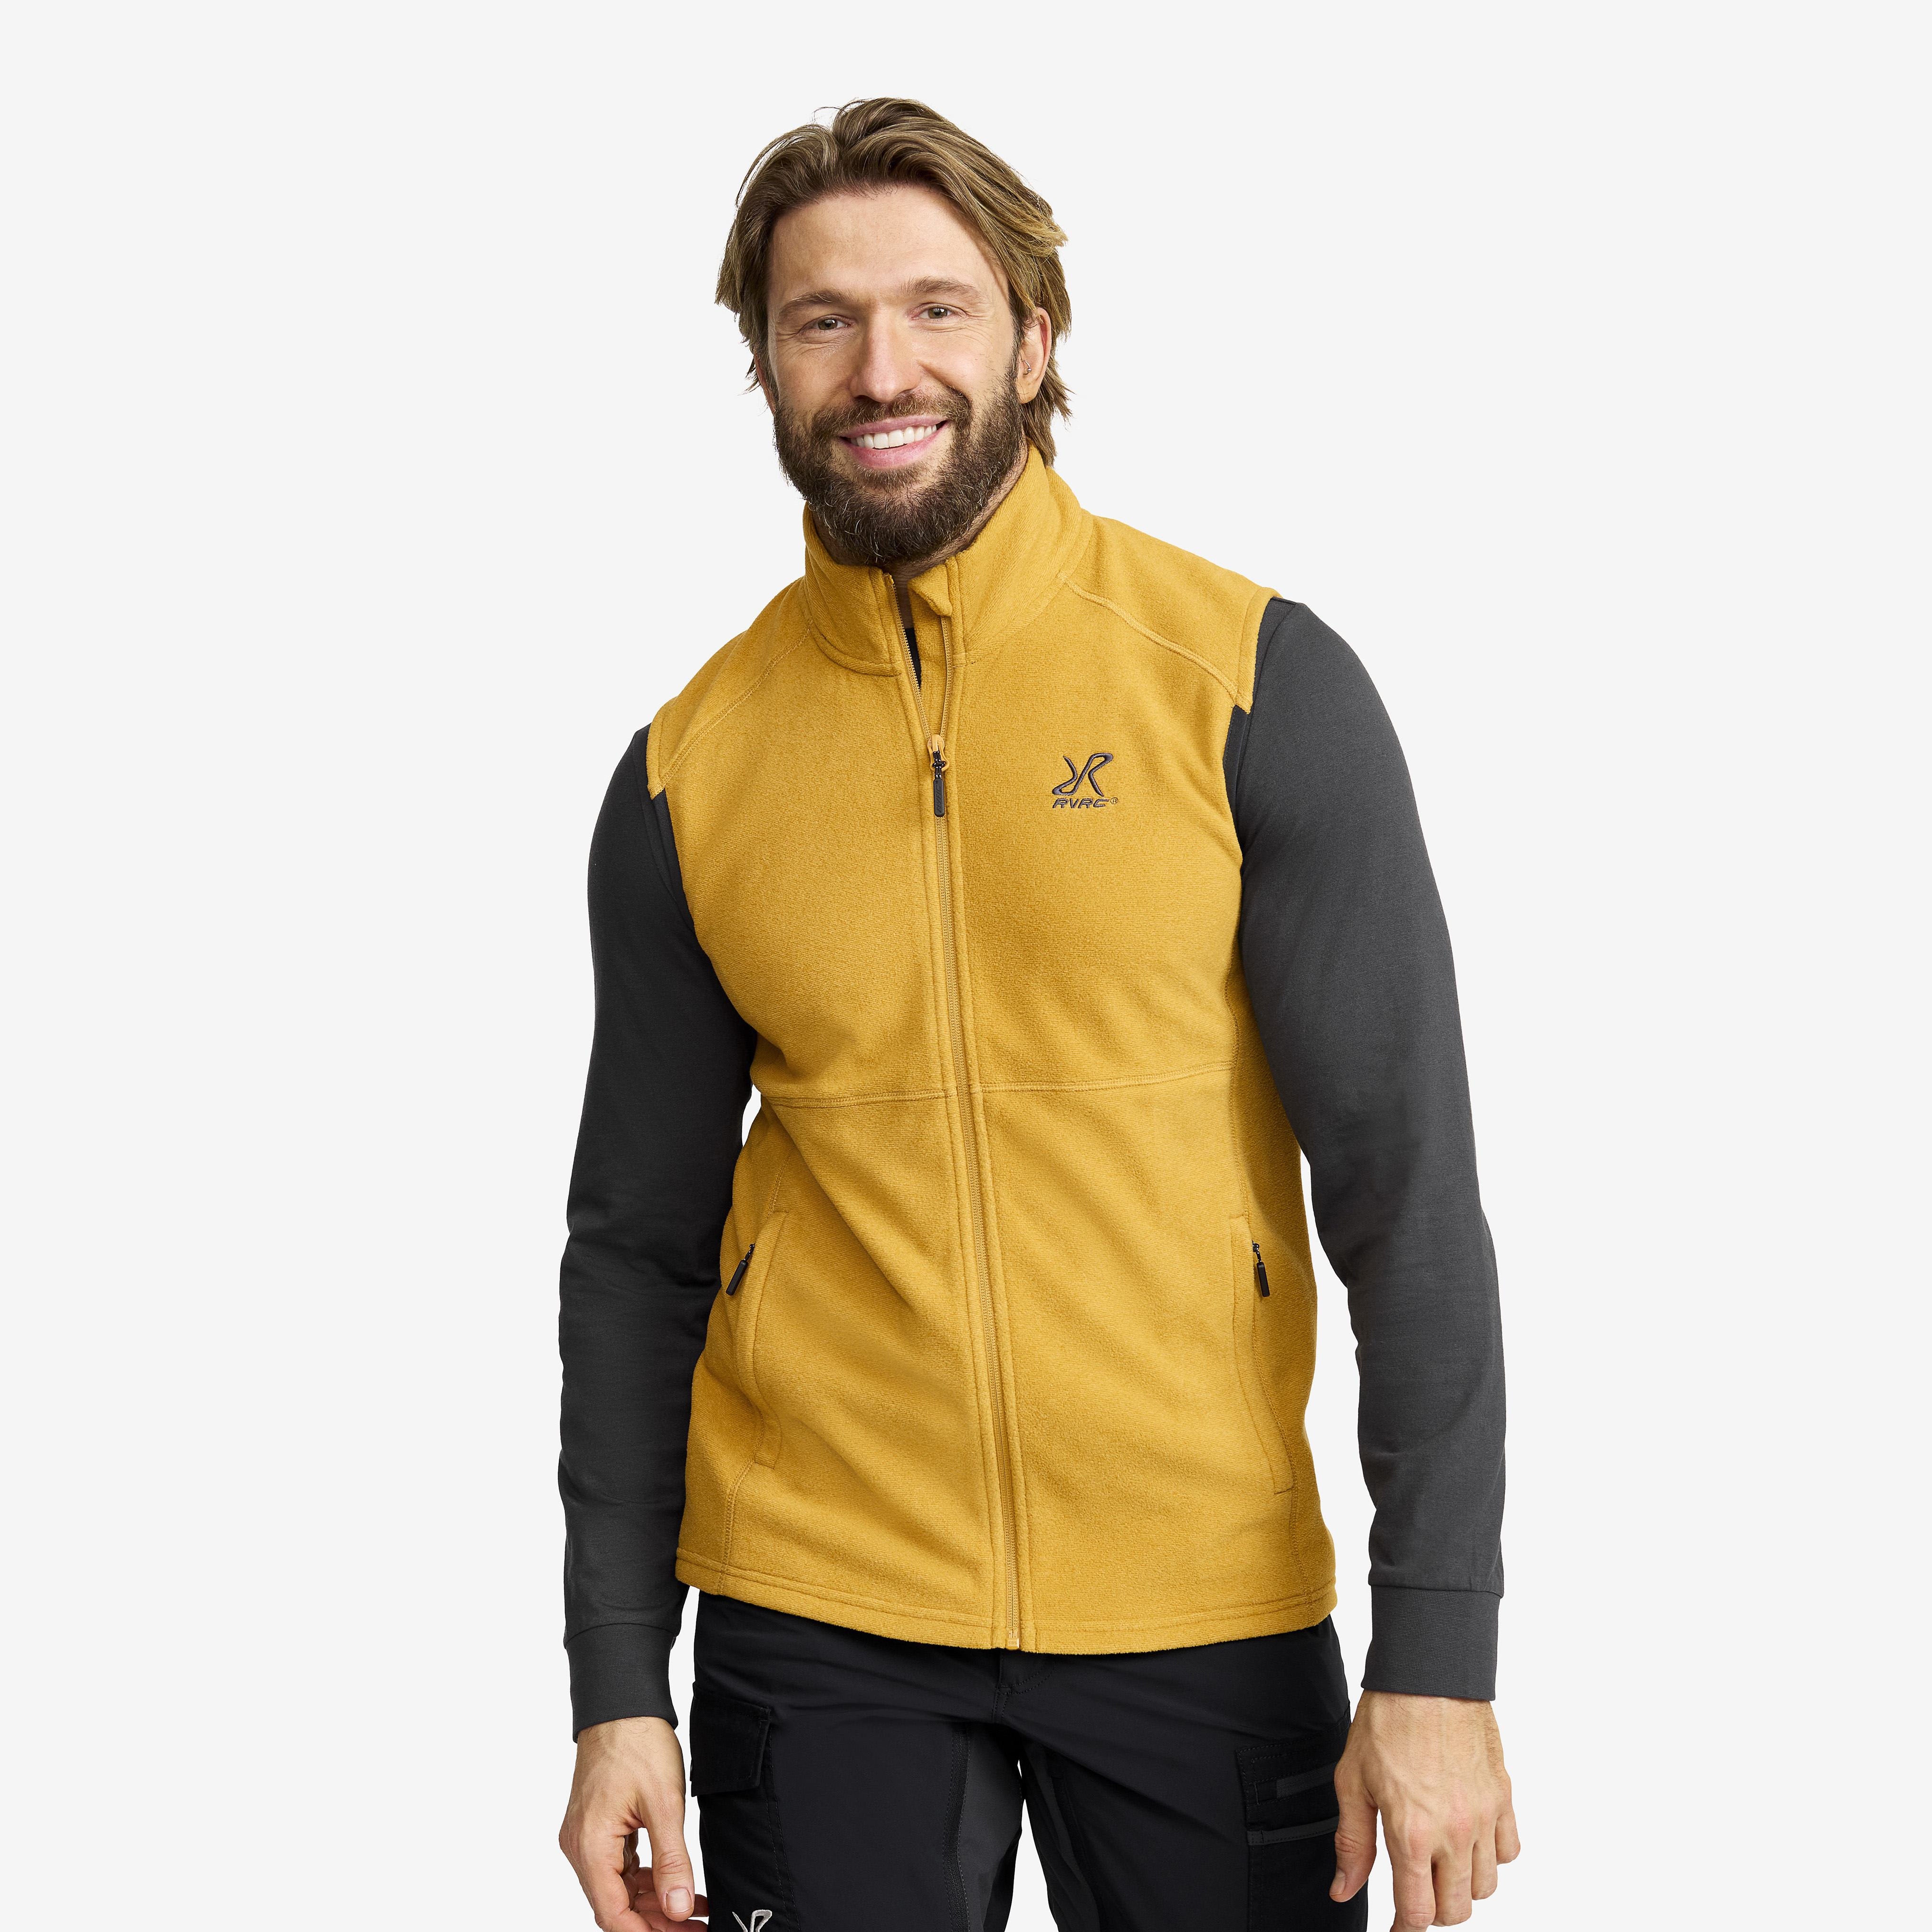 Essential Fleece Vest - Herr - Harvest Gold, Storlek:XL - Jackor > Västar